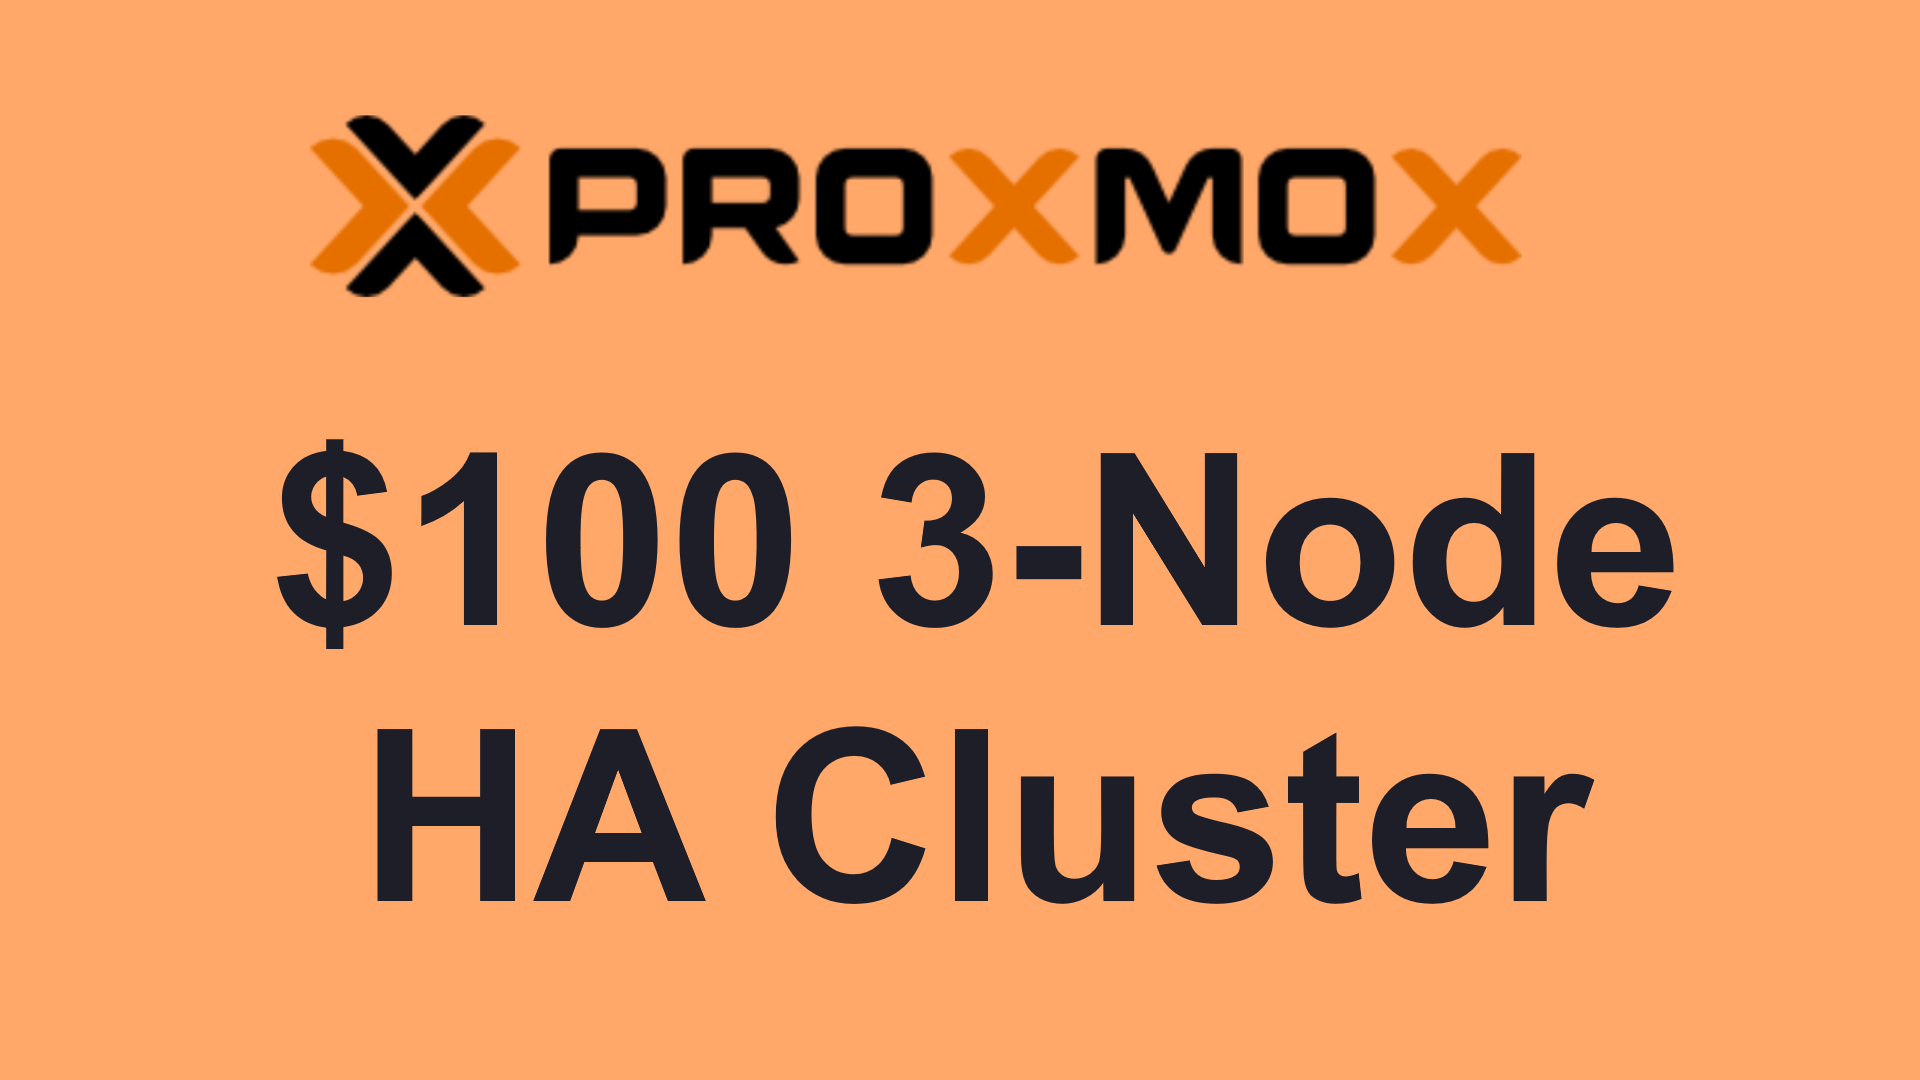 Setting up a Proxmox HA Cluster